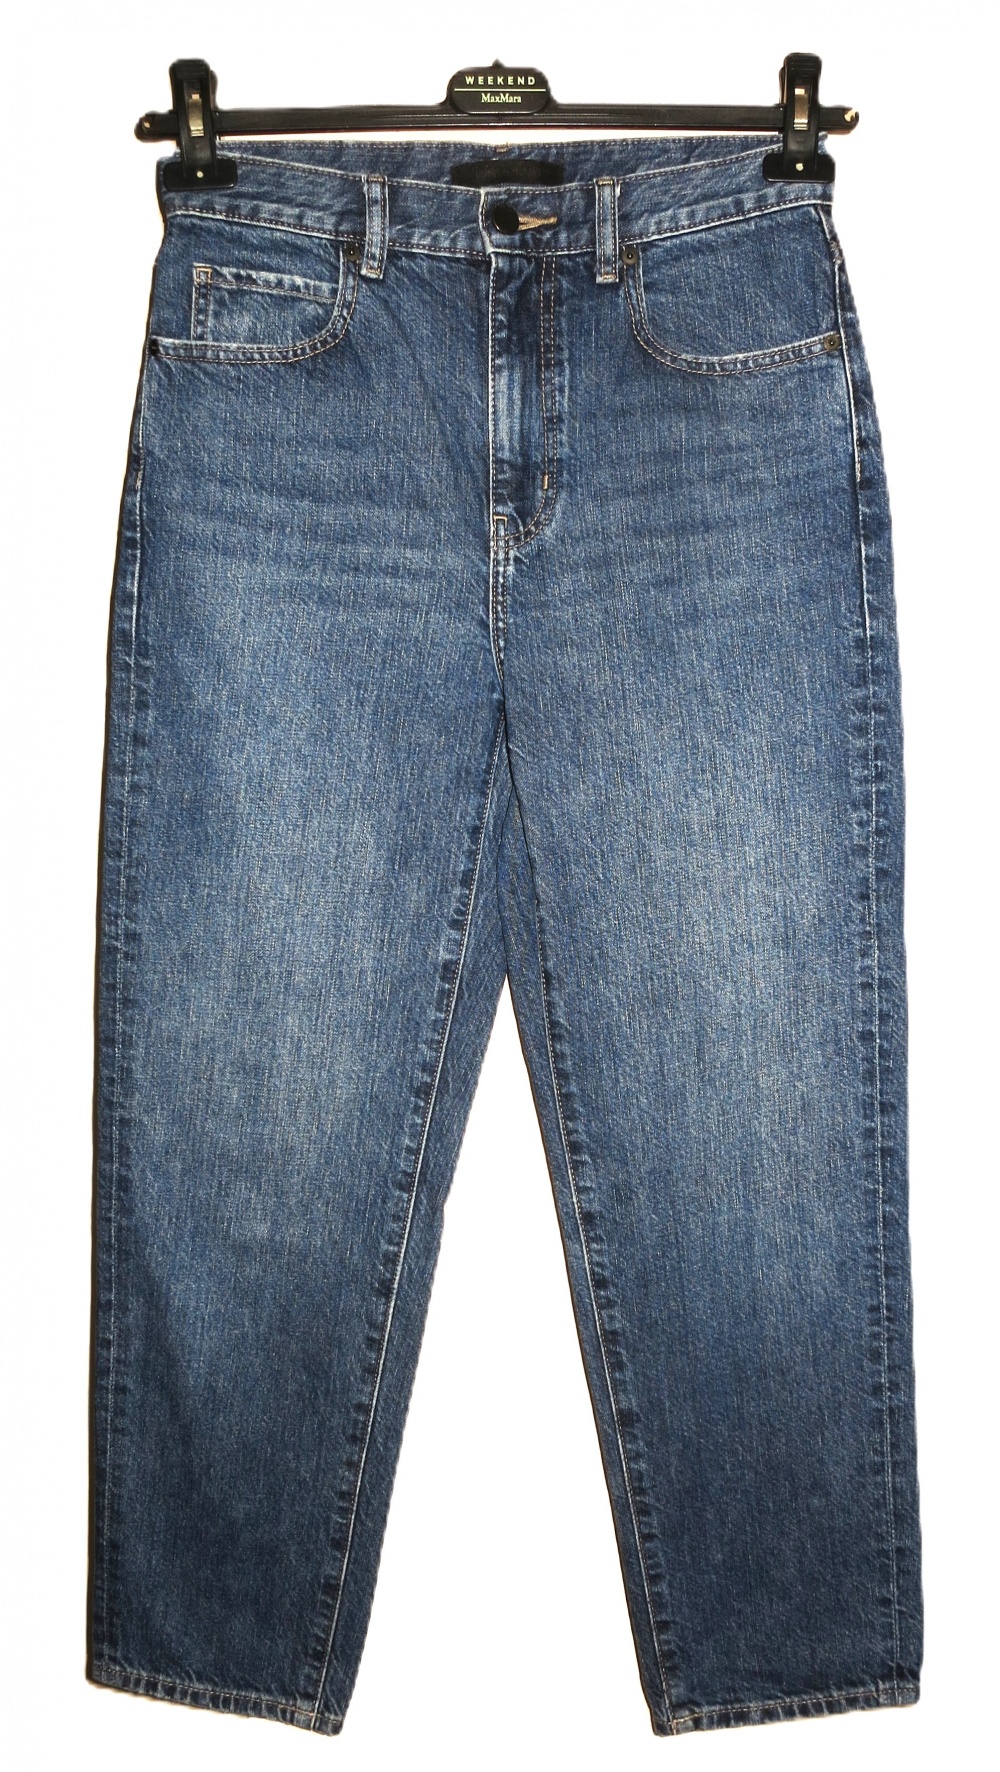 Uniqlo, джинсы Boyfrend, размер 42 (XS-S)